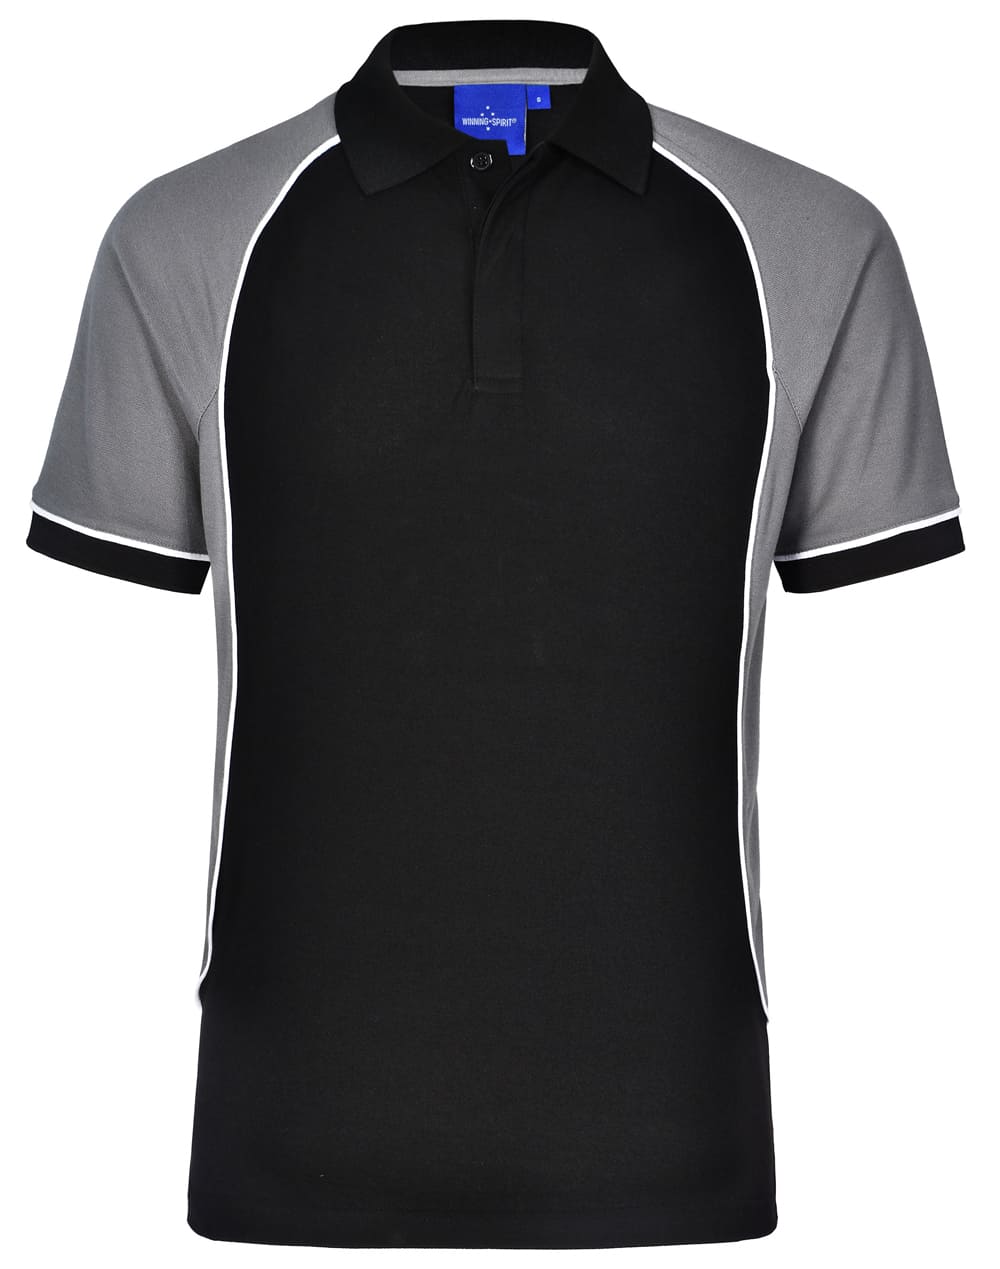 Custom Made Mens Arena (Black, White, Red) Tri-Color Polo T-Shirts Online Australia